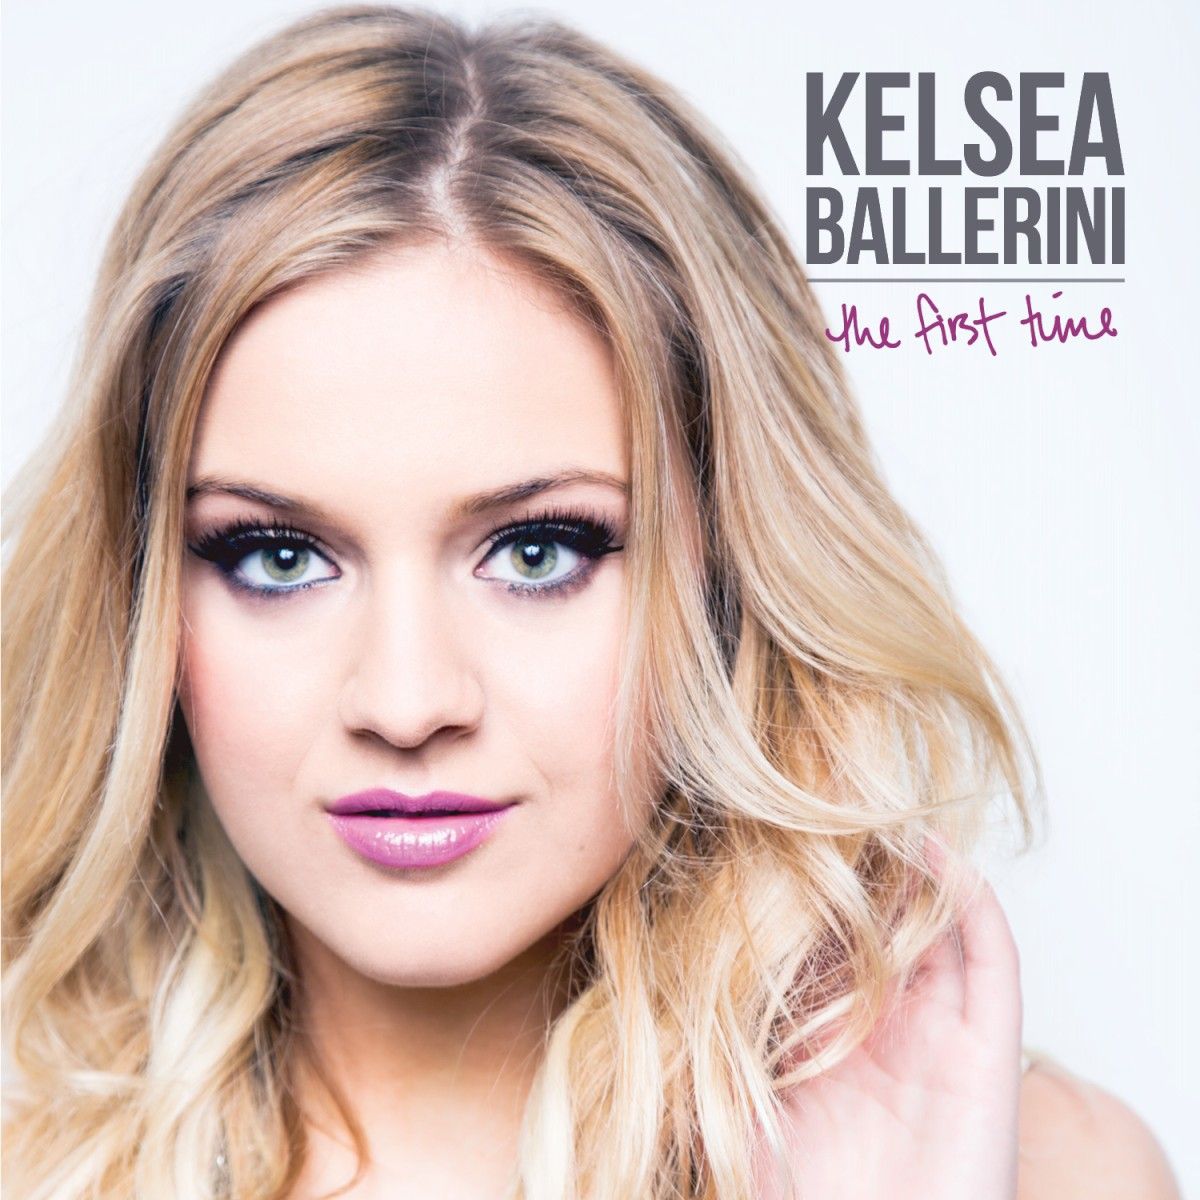 Kelsea Ballerini - The First Time Album Cover